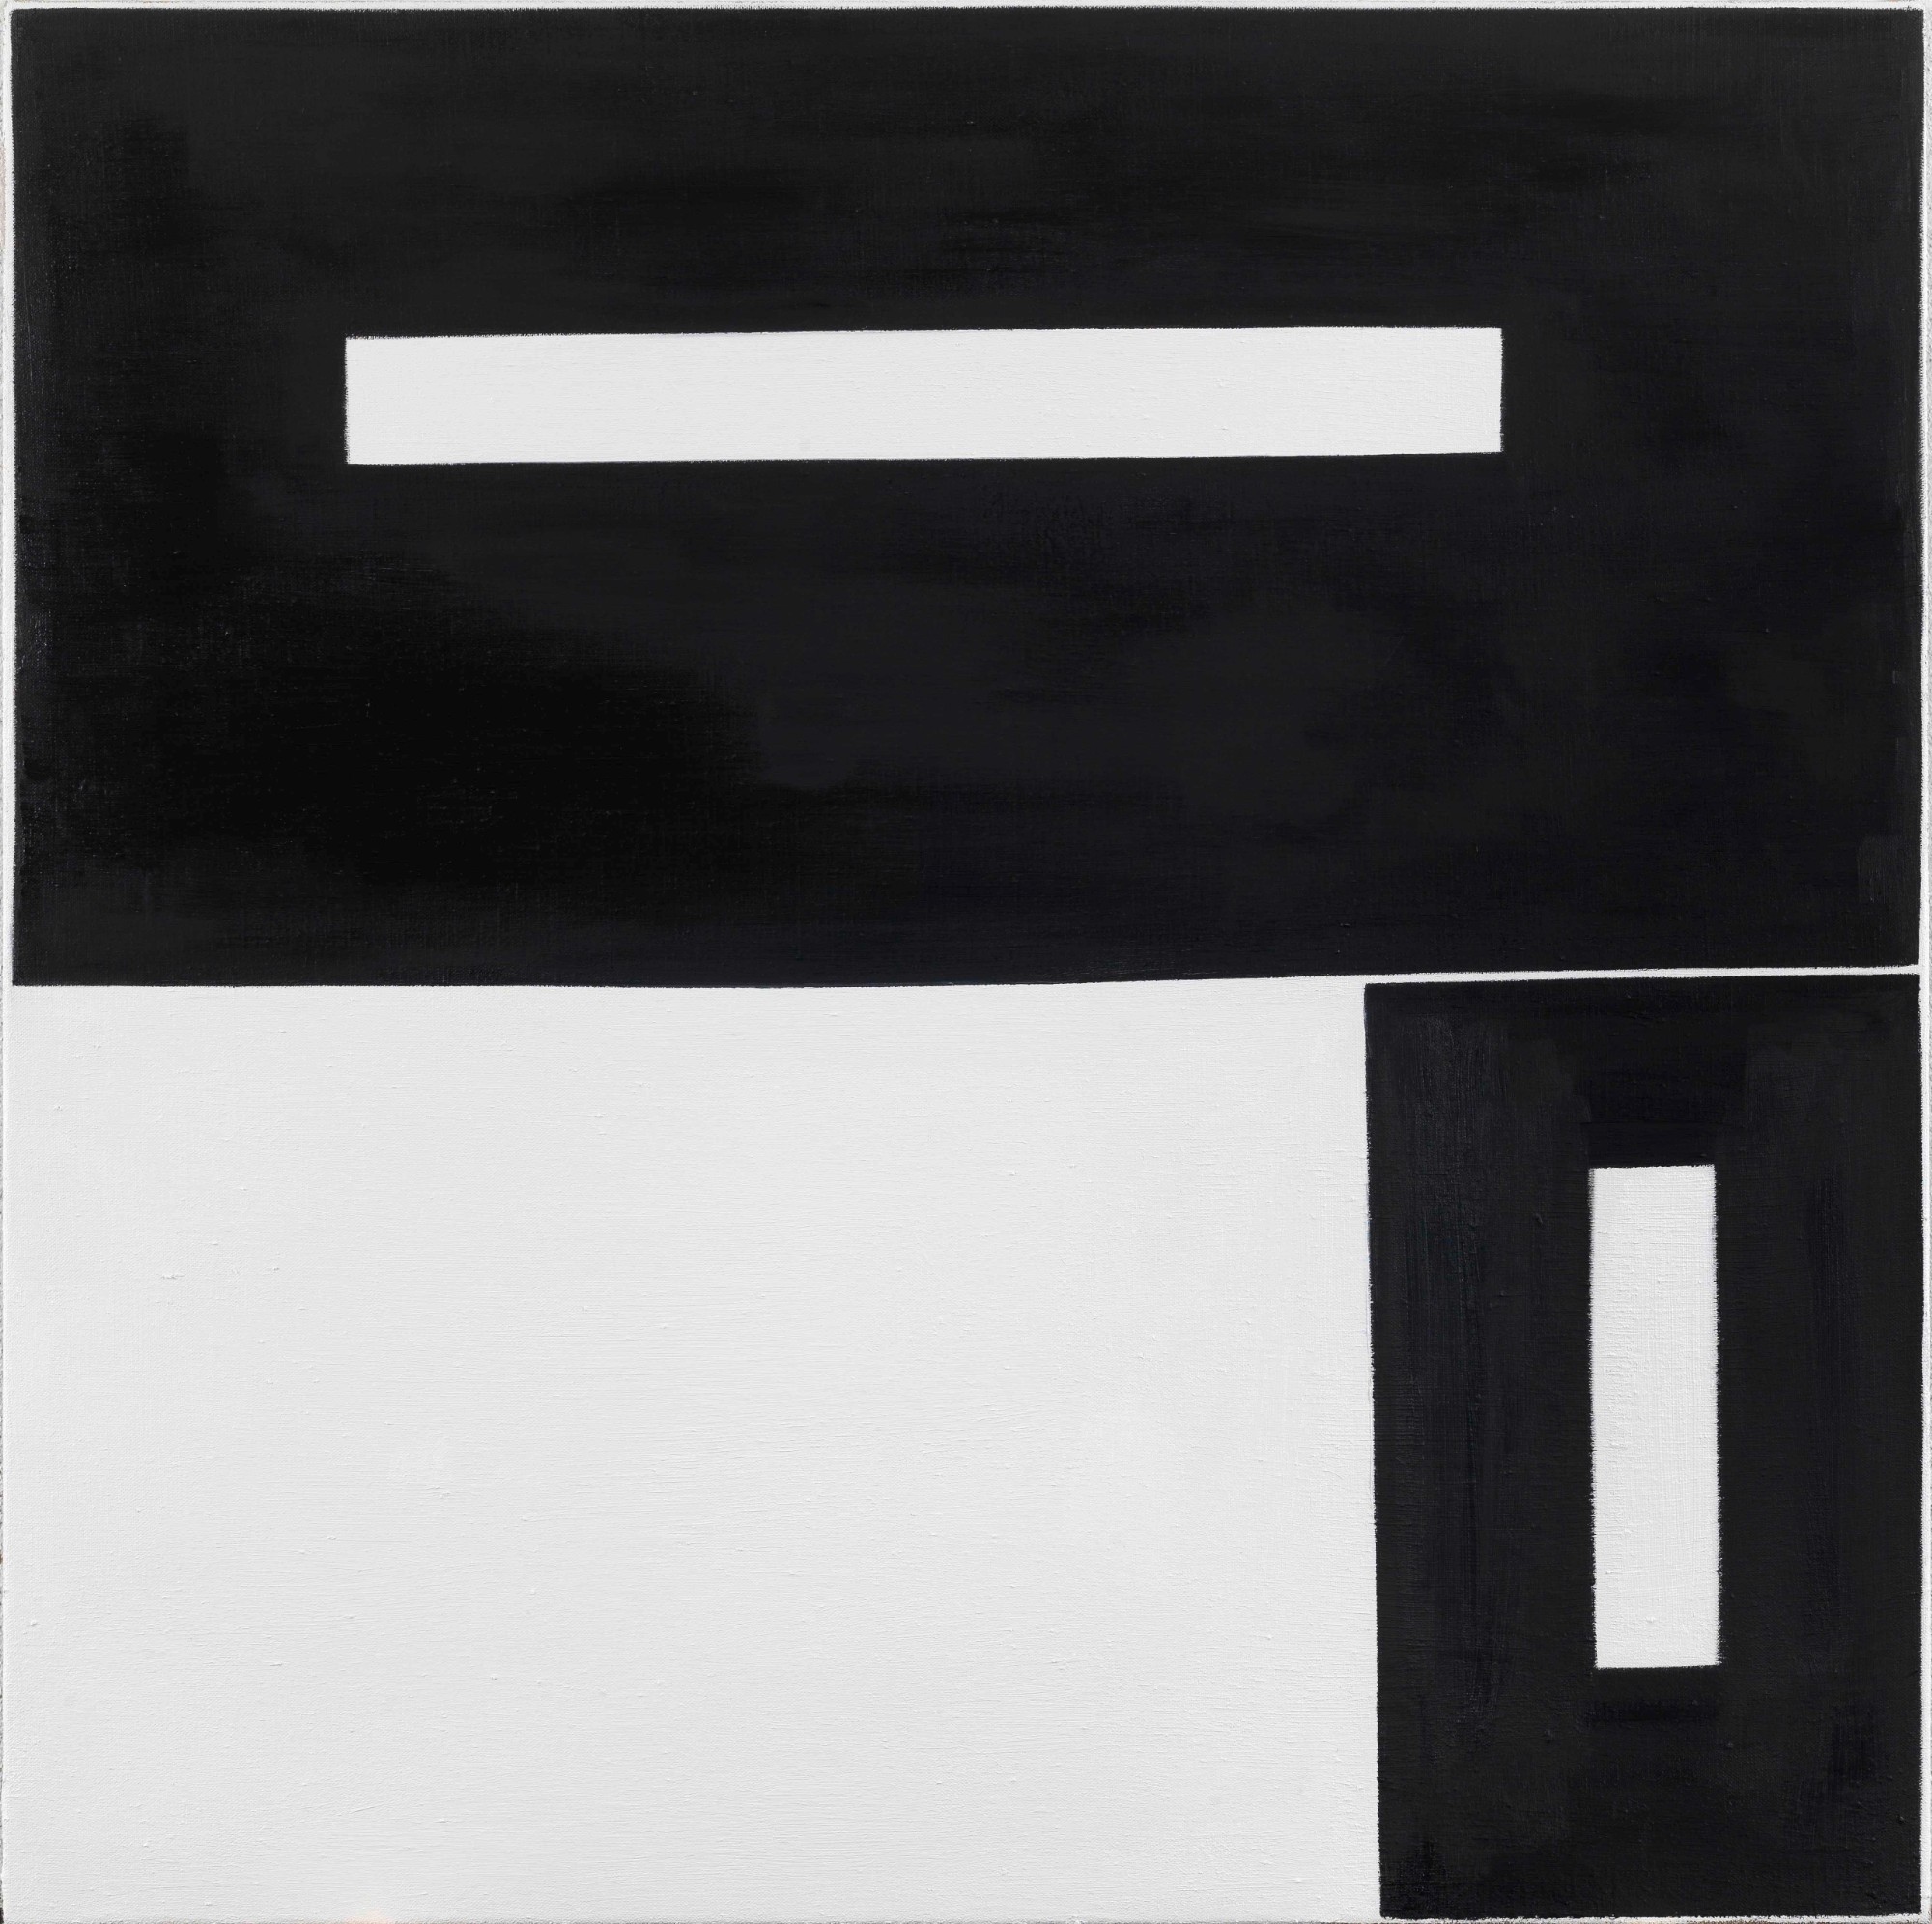 André Butzer, untitled, 2012, oil on canvas, 104 x 104 cm